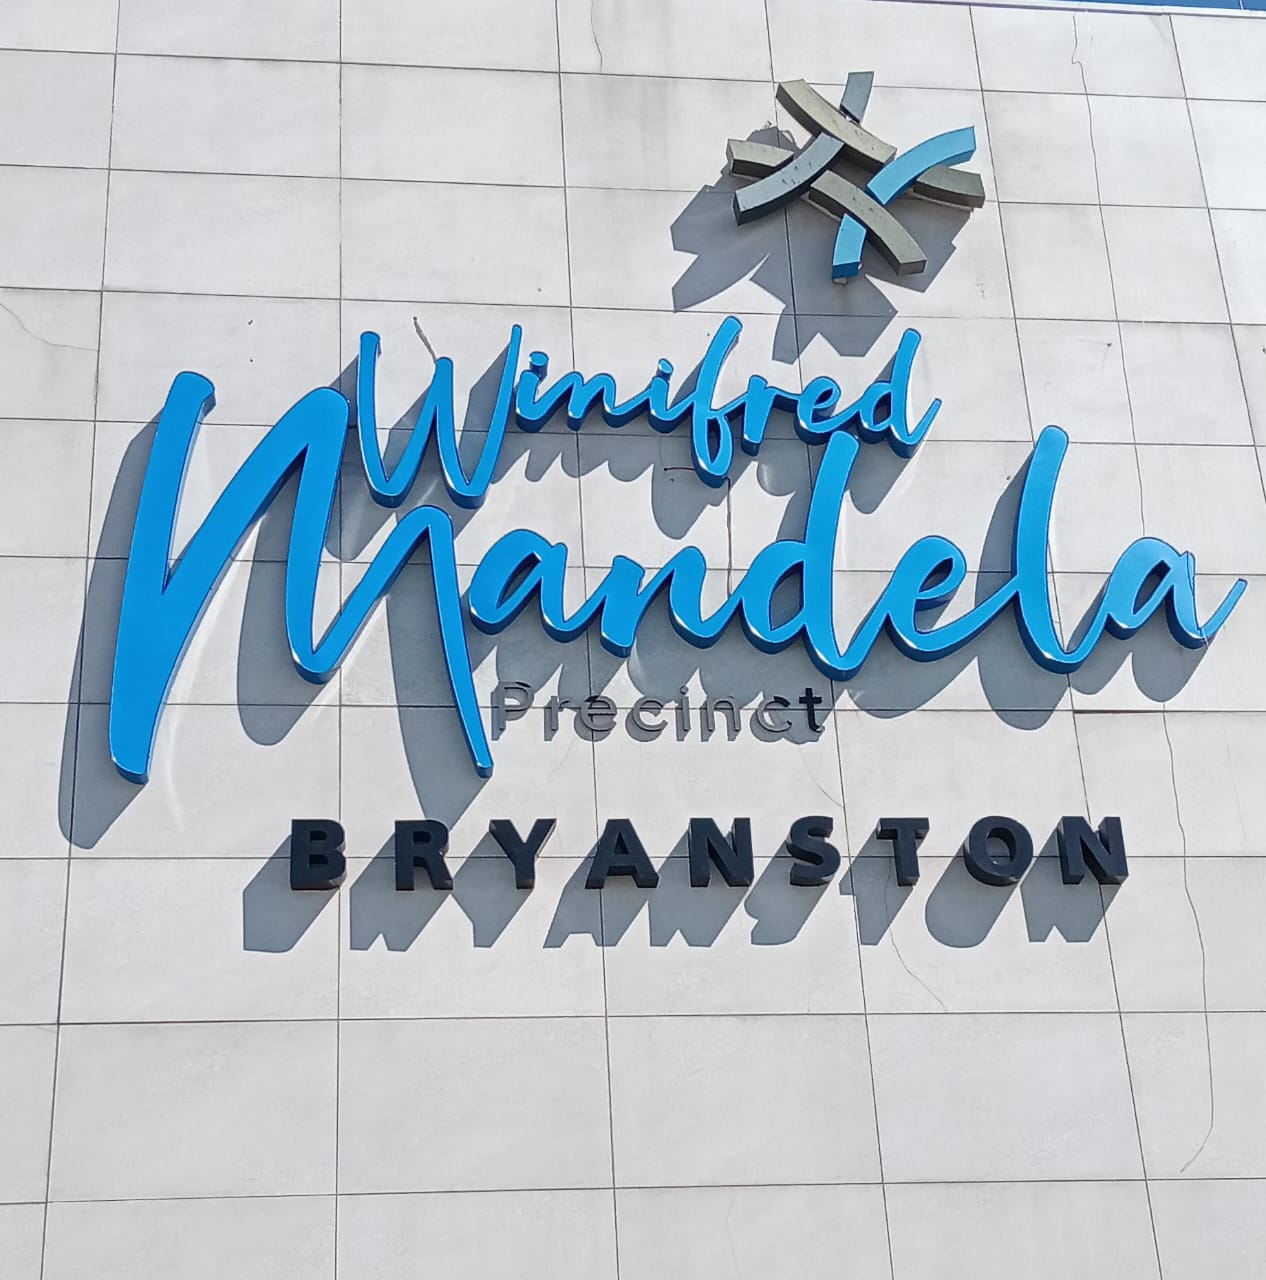 Transformation In Johannesburg: Nicolway Centre Becomes Winifred Mandela Precinct 8